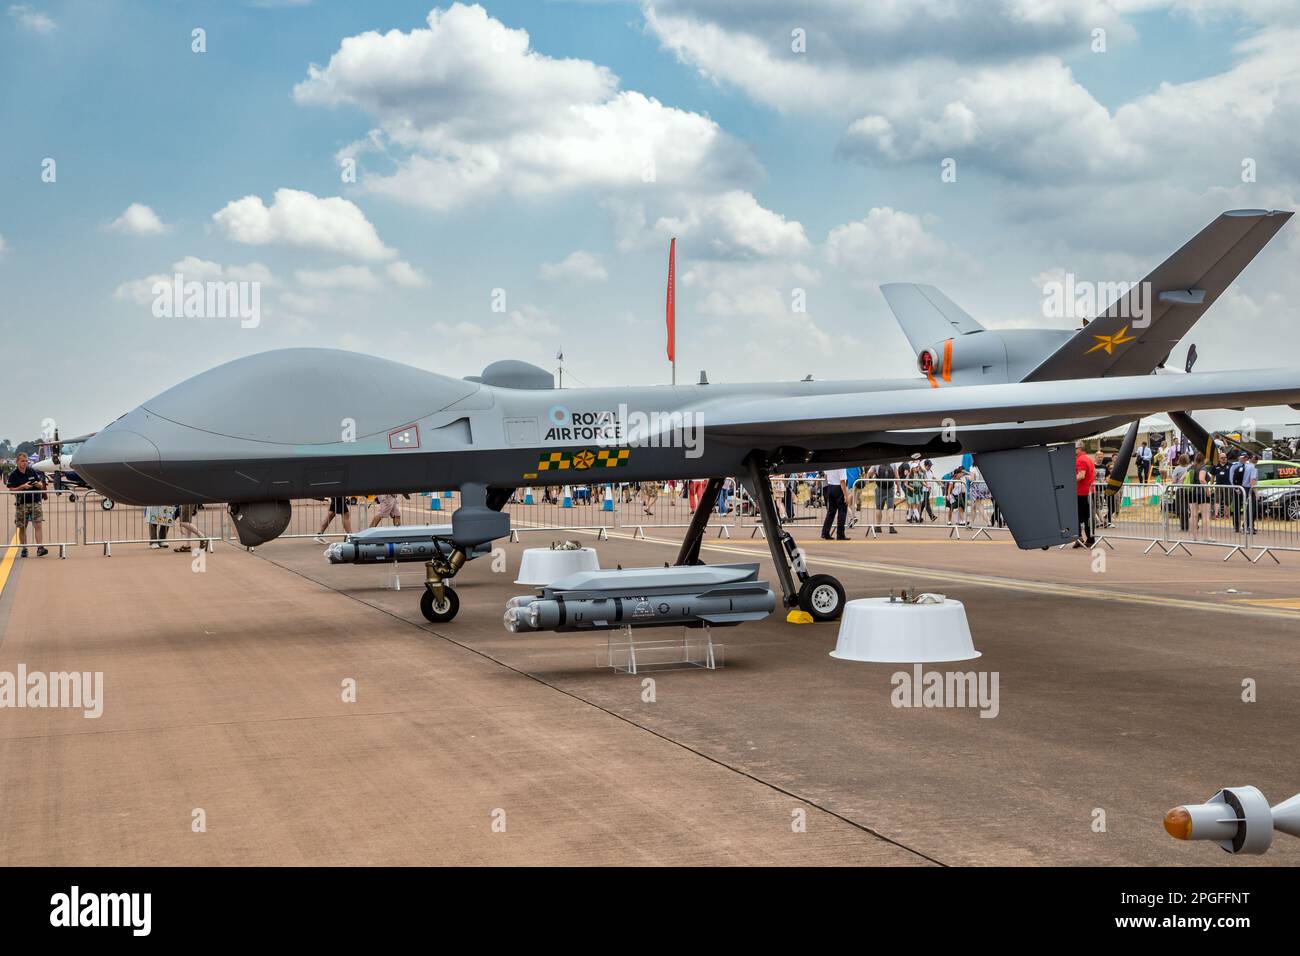 RAF Protector RG Mk 1 (General Atomics MQ-9B Reaper) UAV drone on display at RAF Fairford air base. Fairford, UK - July 13, 2018 Stock Photo